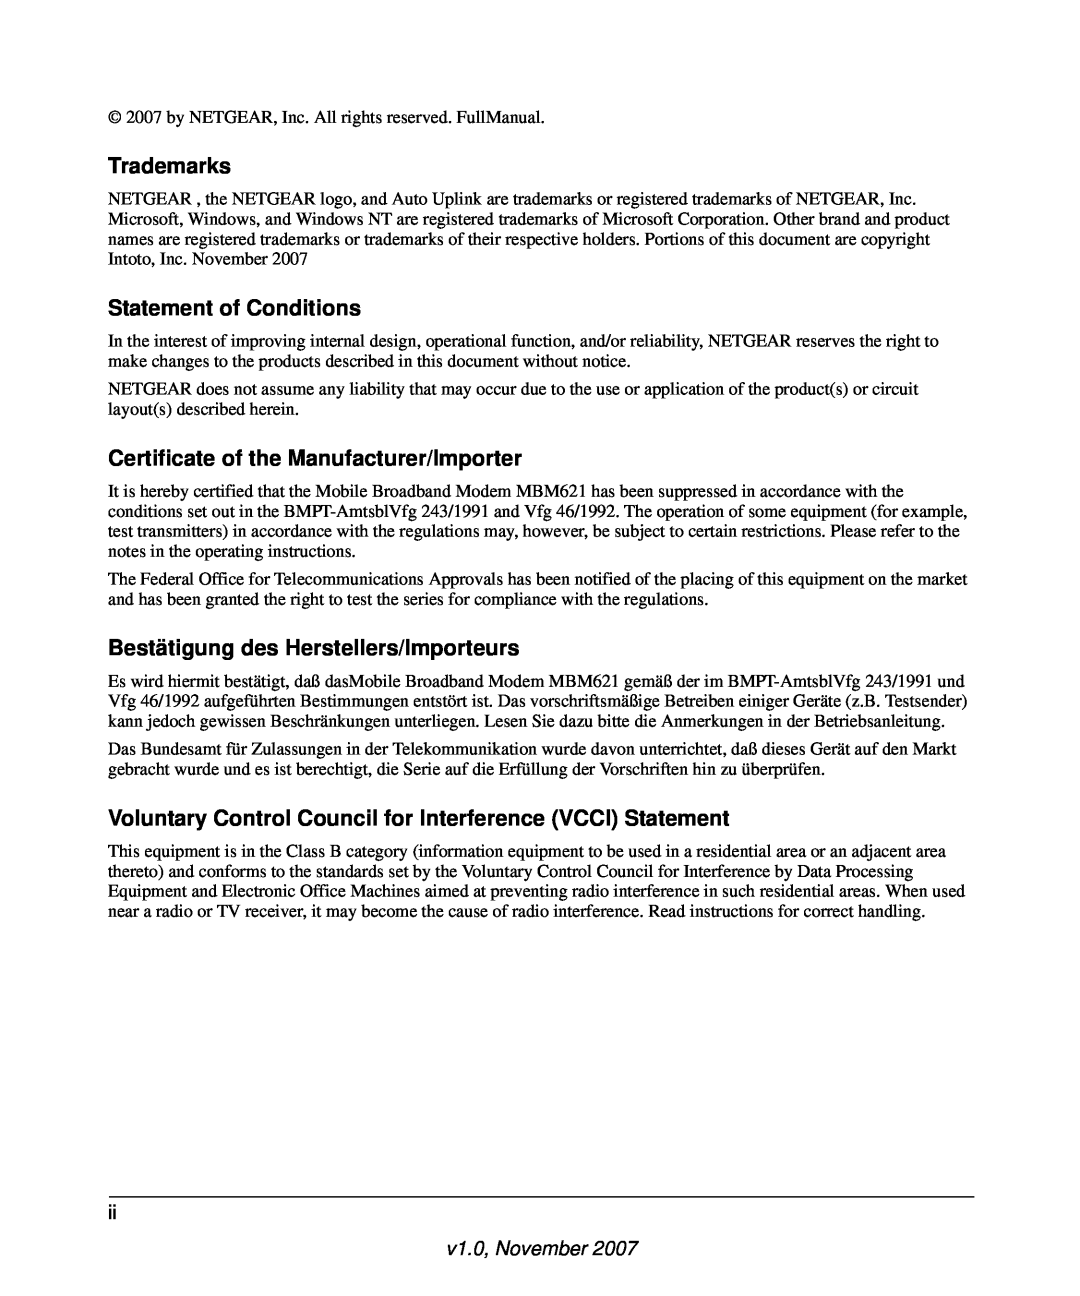 NETGEAR MBM621 user manual Trademarks, Statement of Conditions, Certificate of the Manufacturer/Importer, v1.0, November 